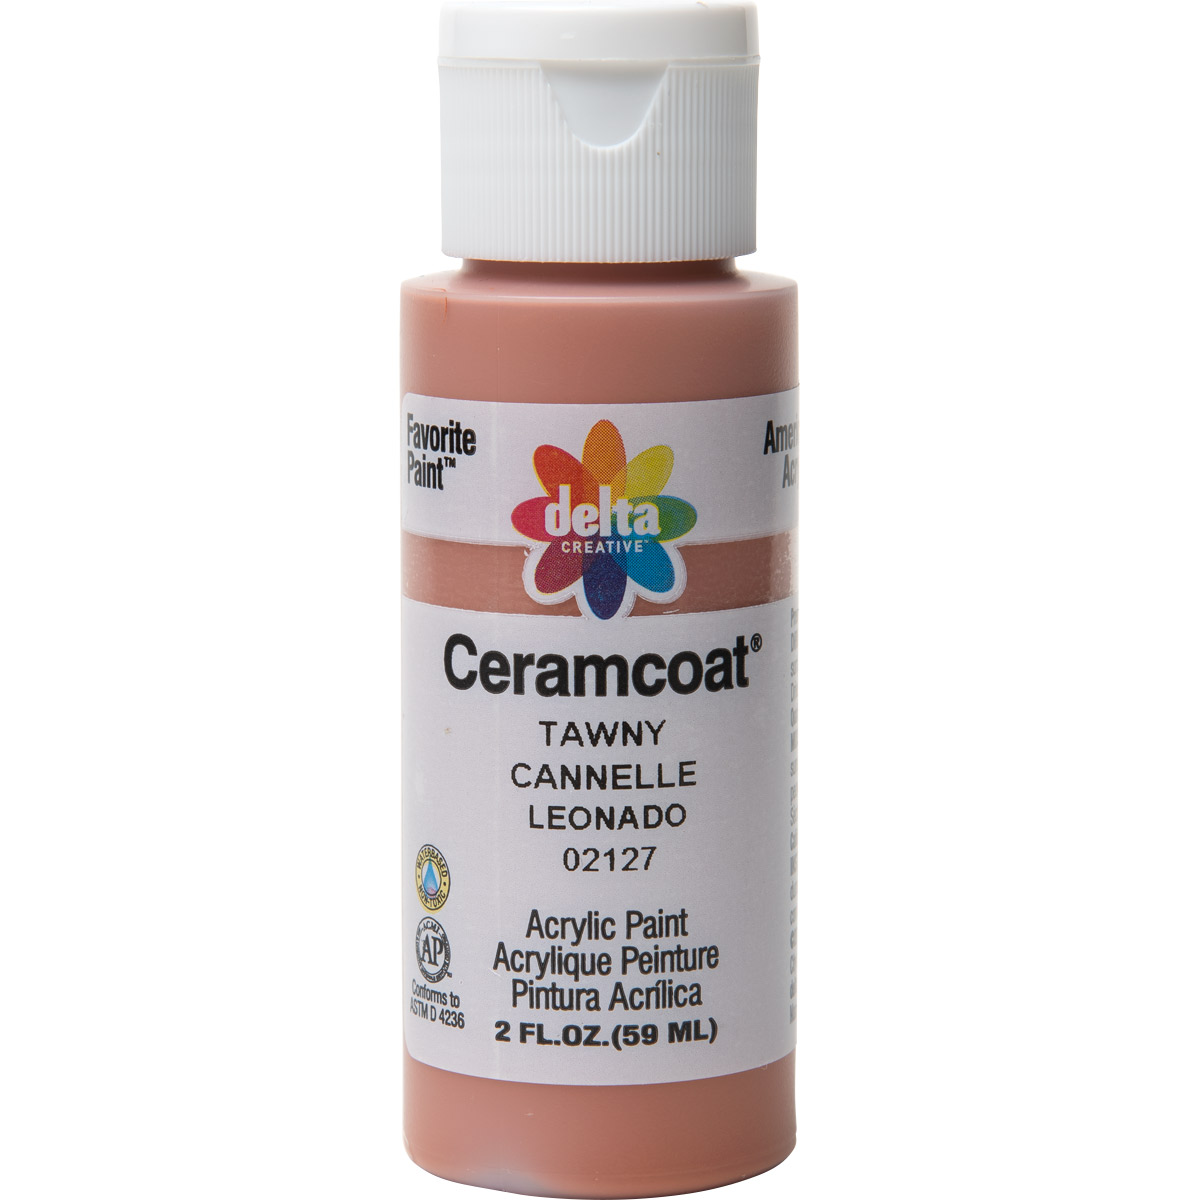 Delta Ceramcoat Acrylic Paint - Tawny, 2 oz. - 021270202W